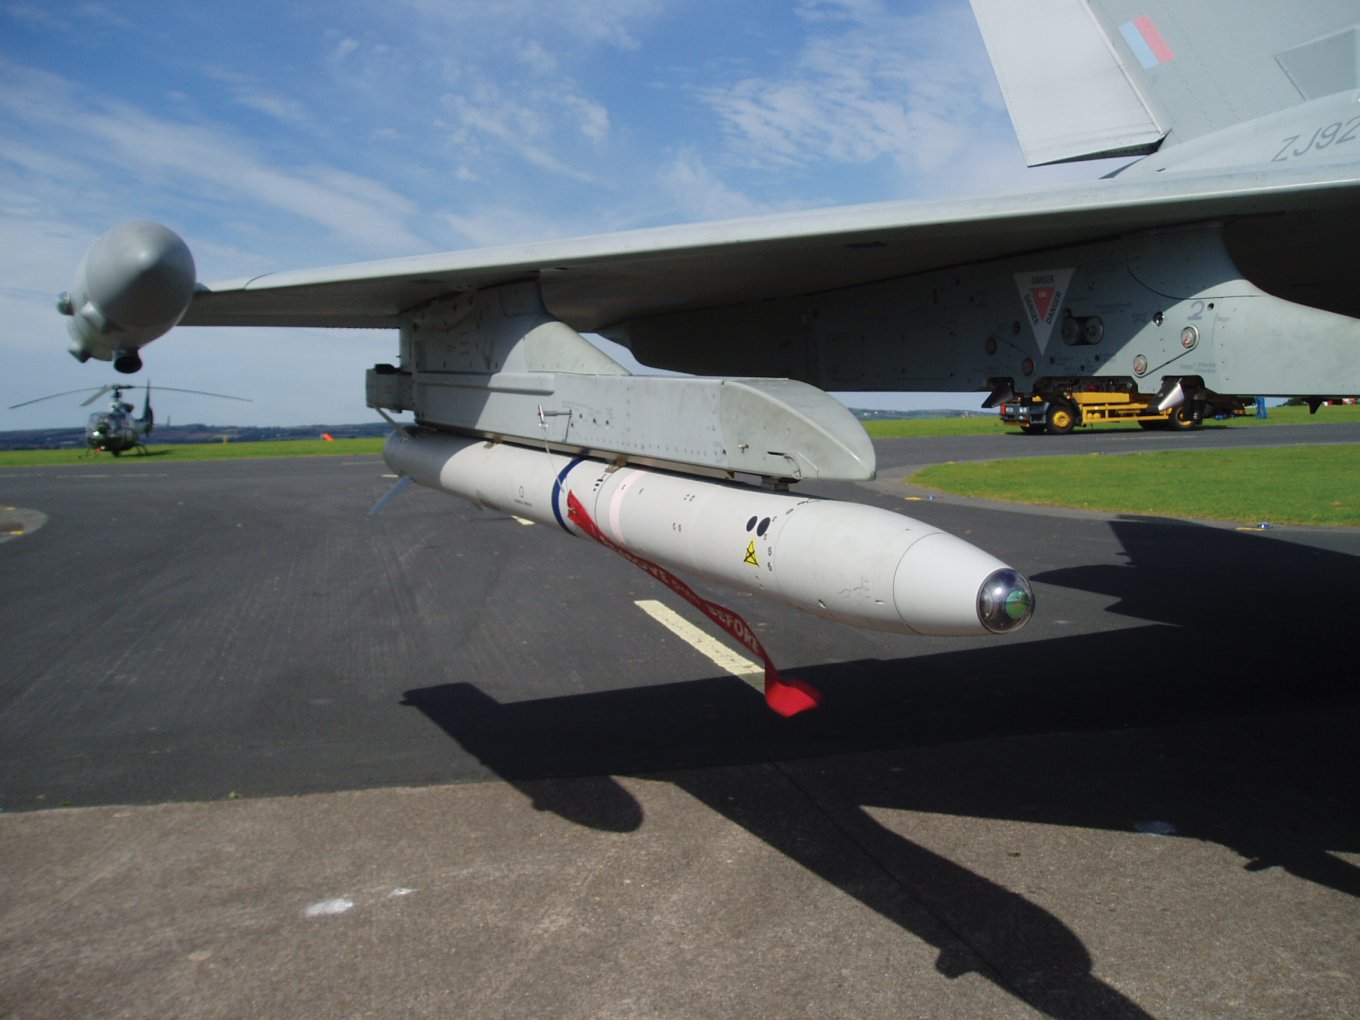 AIM-132 ASRAAM missile